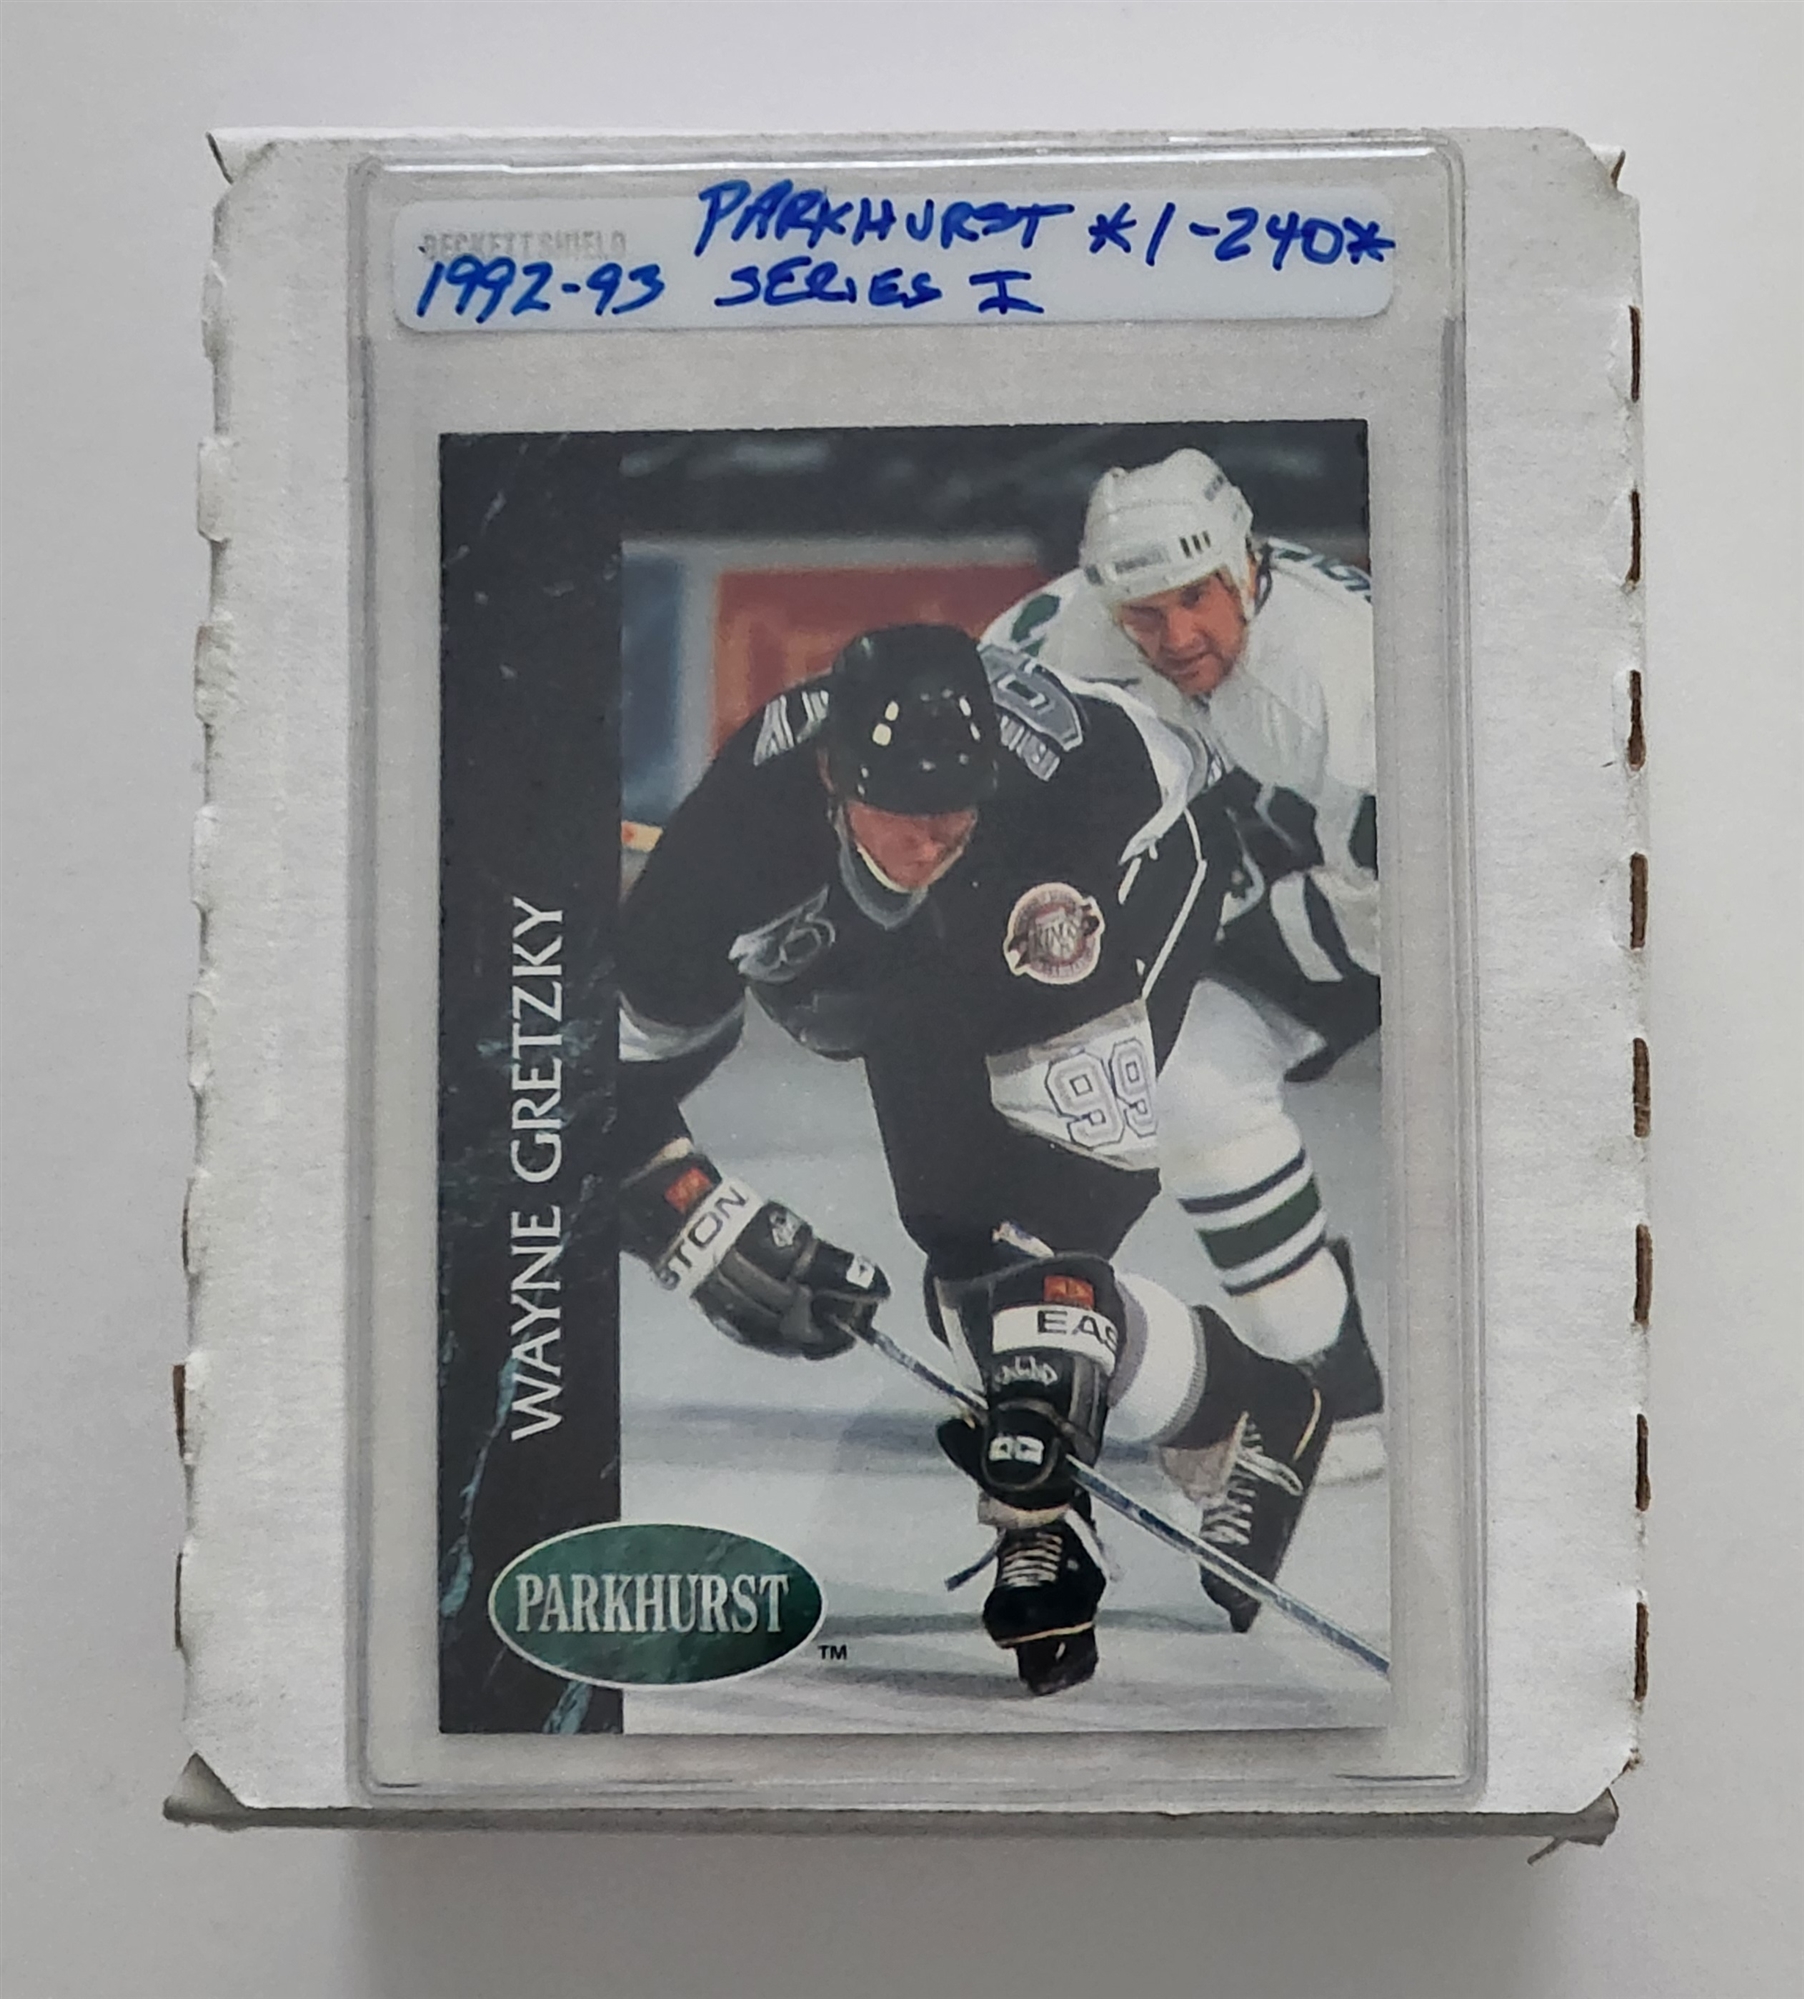 1992-93 Parkhurst NHL Hockey Trading Cards Complete Series 1 Base Set